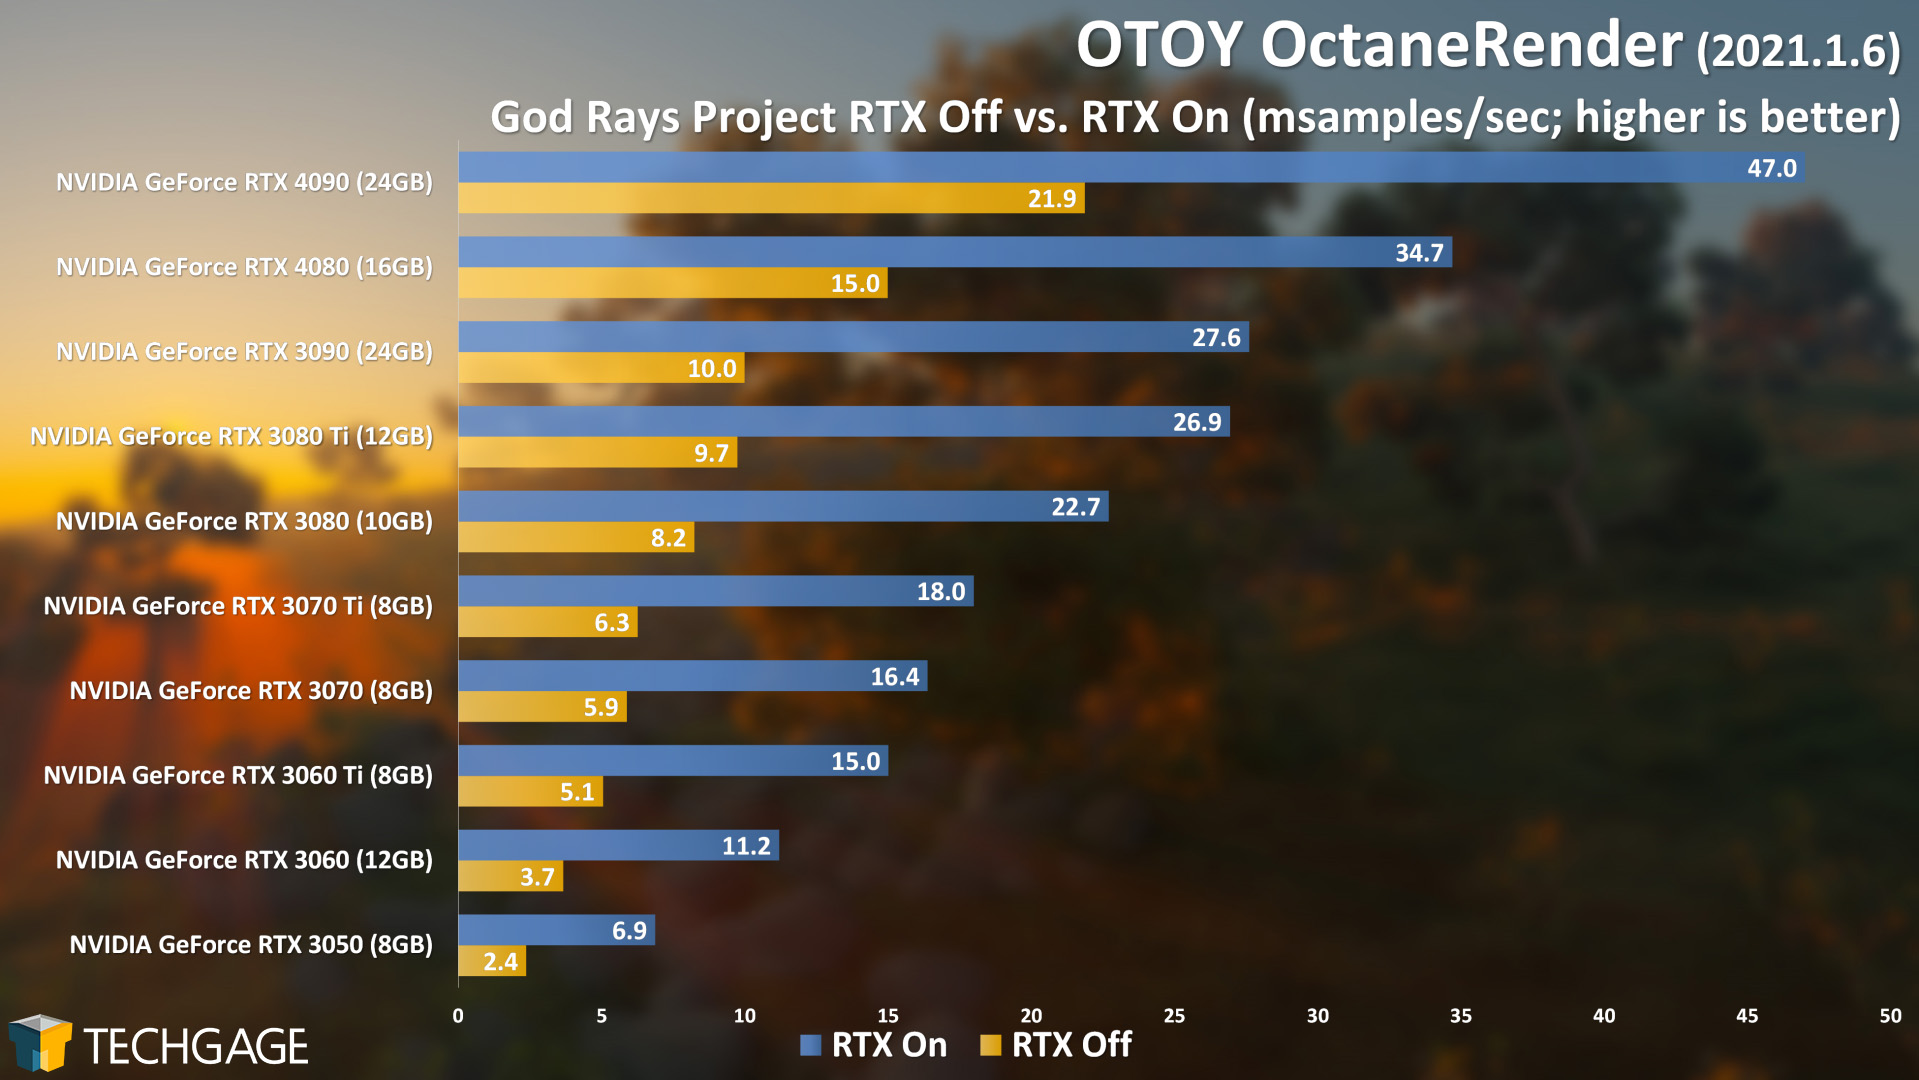 OTOY OctaneRender - God Rays RTX On and Off (NVIDIA GeForce RTX 4080)